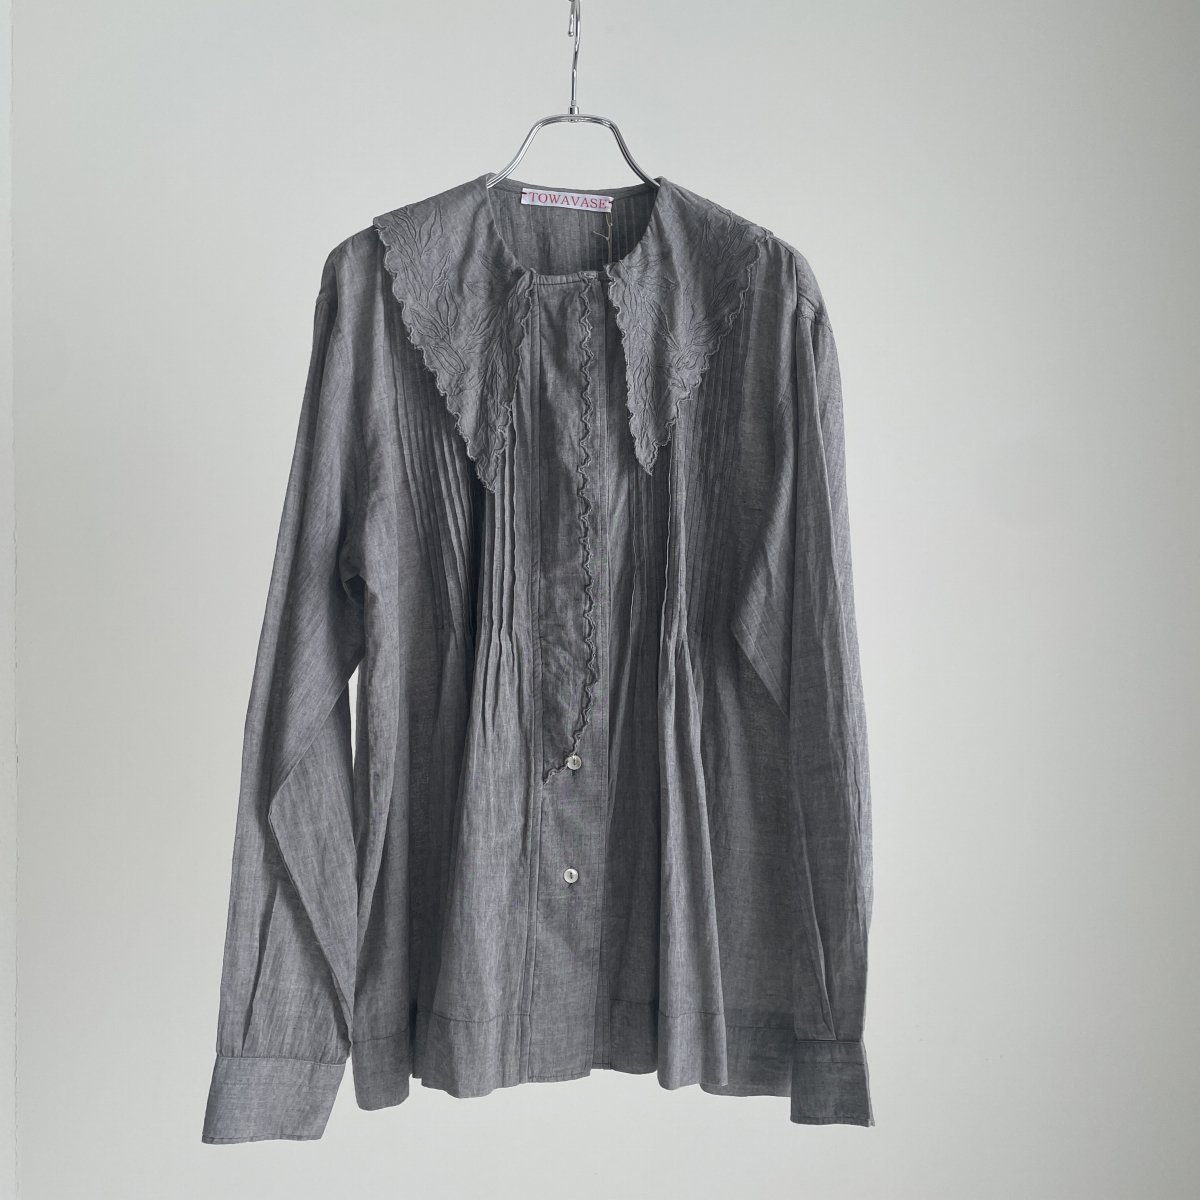 TOWAVASE Fille blouse/26-0022A*SL#IT - ARTHUR FASHION WORLD